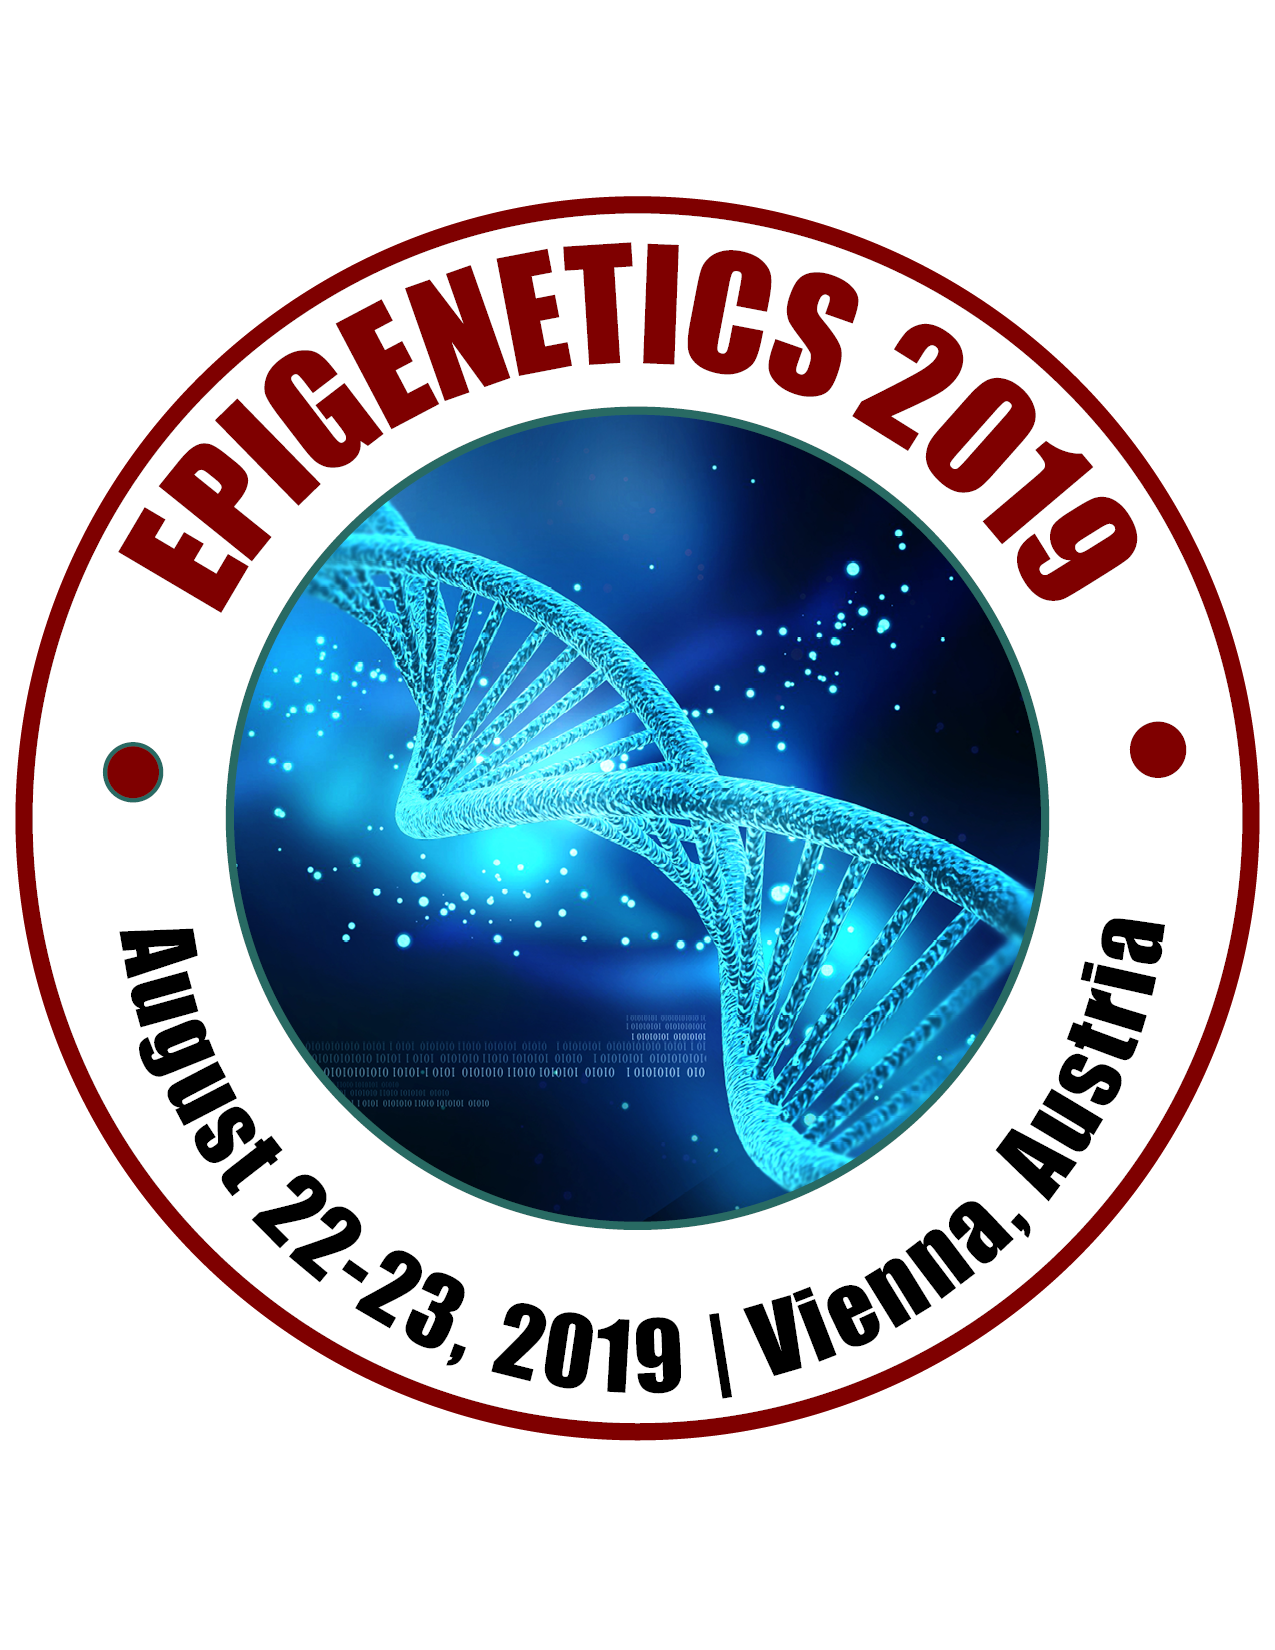 Photos of 5th International Congress on Epigenetics & Chromatin 2019